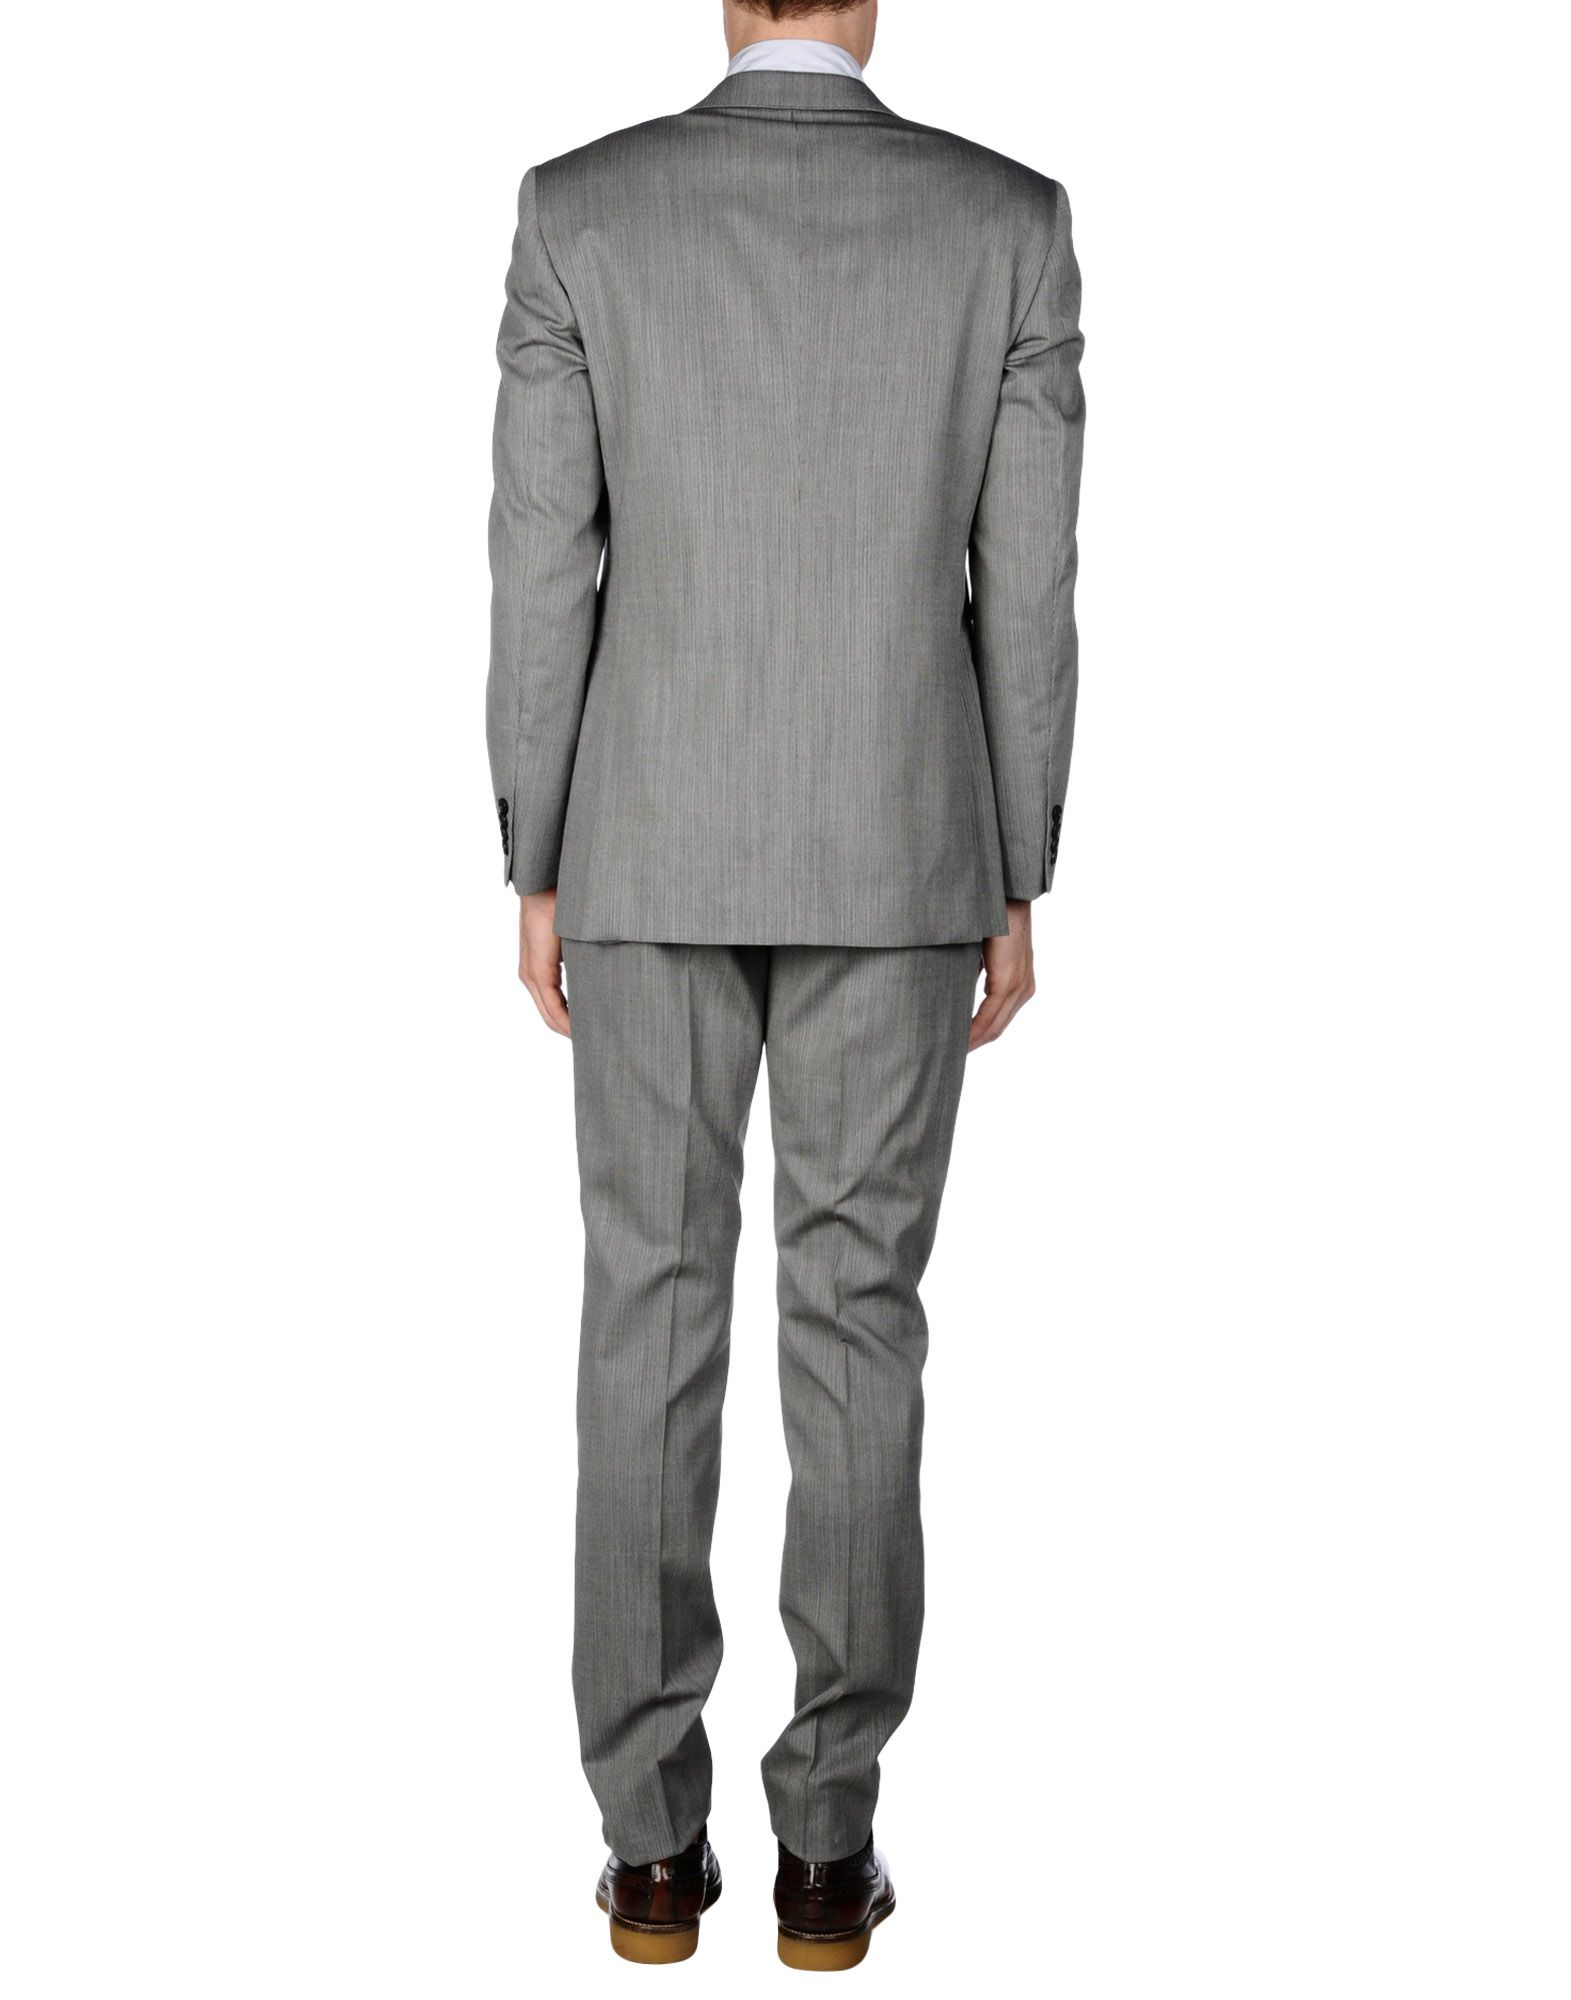 Wool Suit (Gray) for Men - Lyst